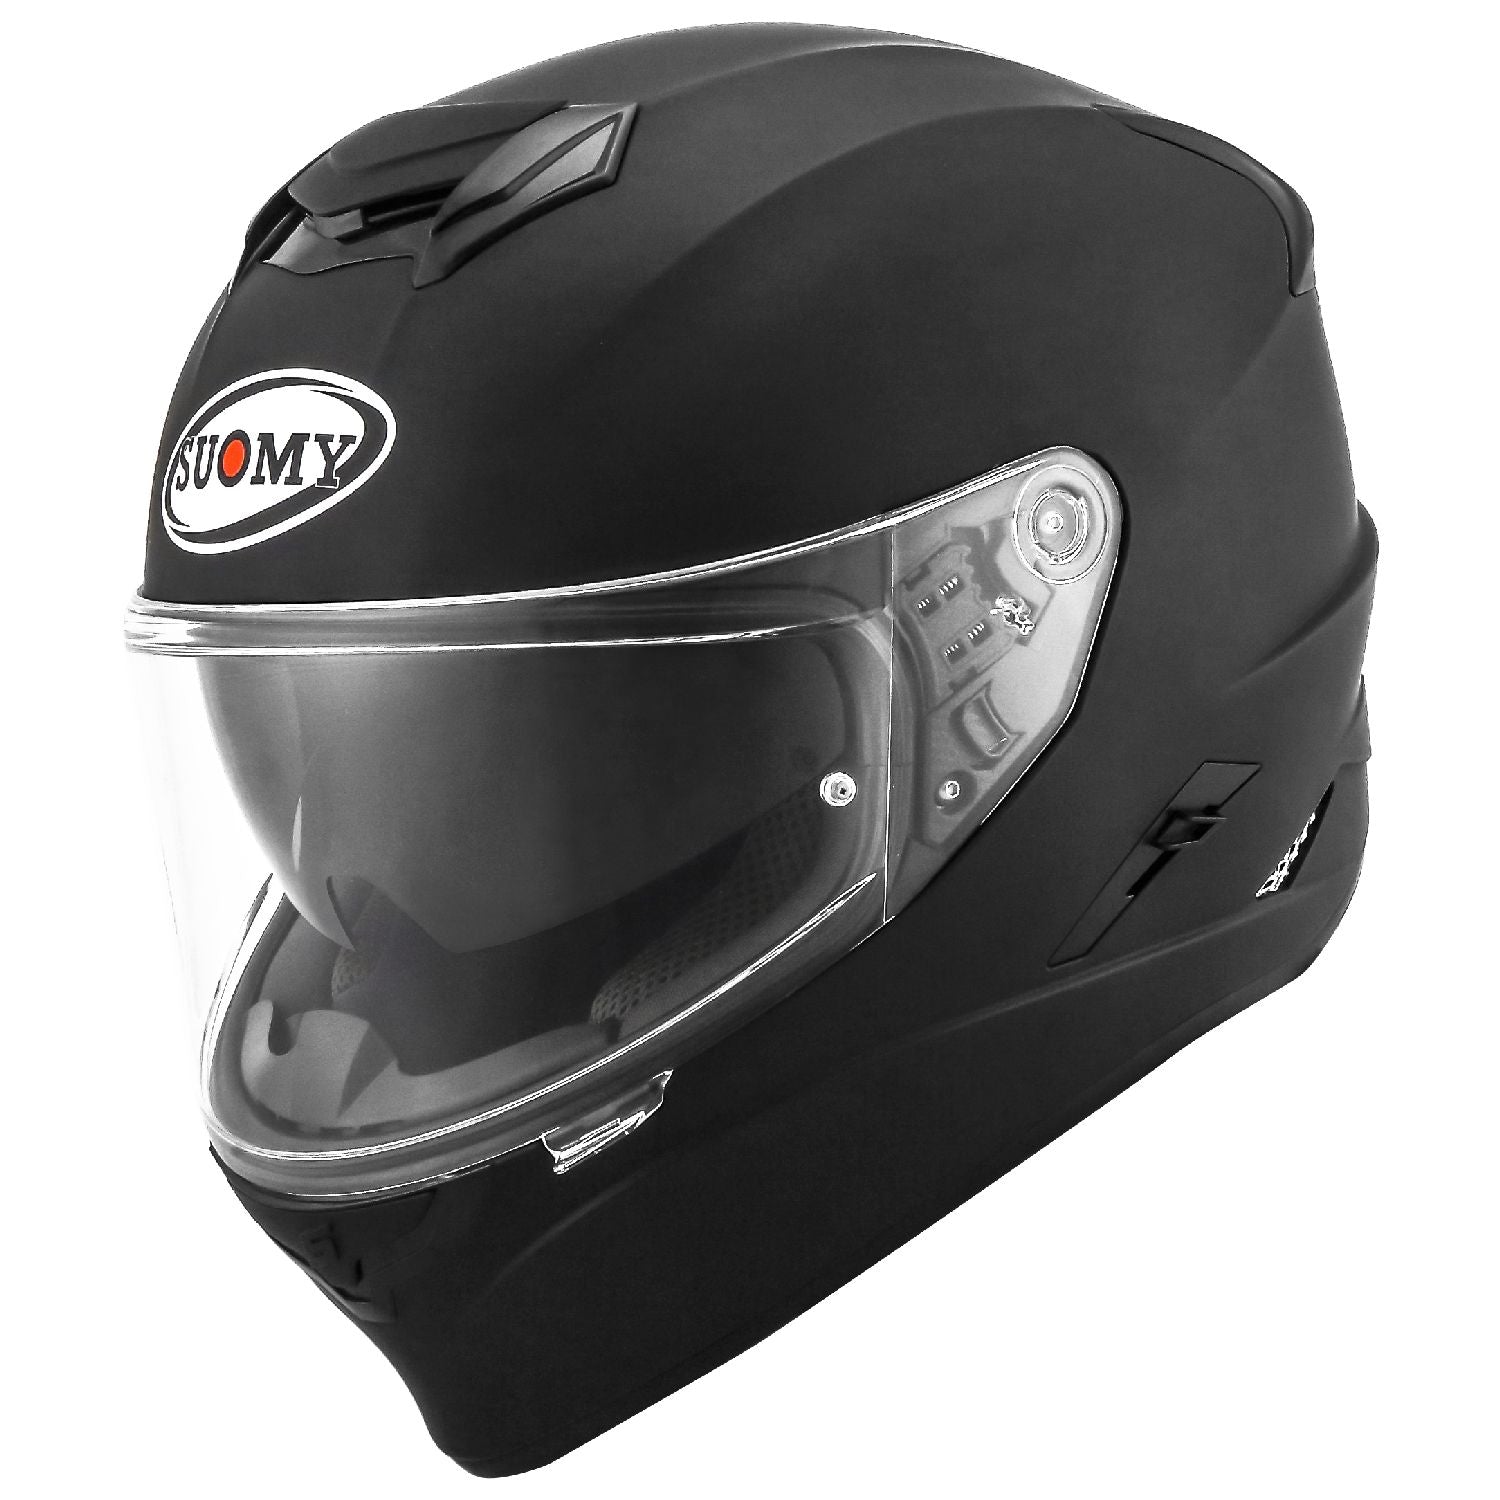 Suomy Stellar Plain Matte Black Full Face Motorcycle Helmet (XS - 2XL)